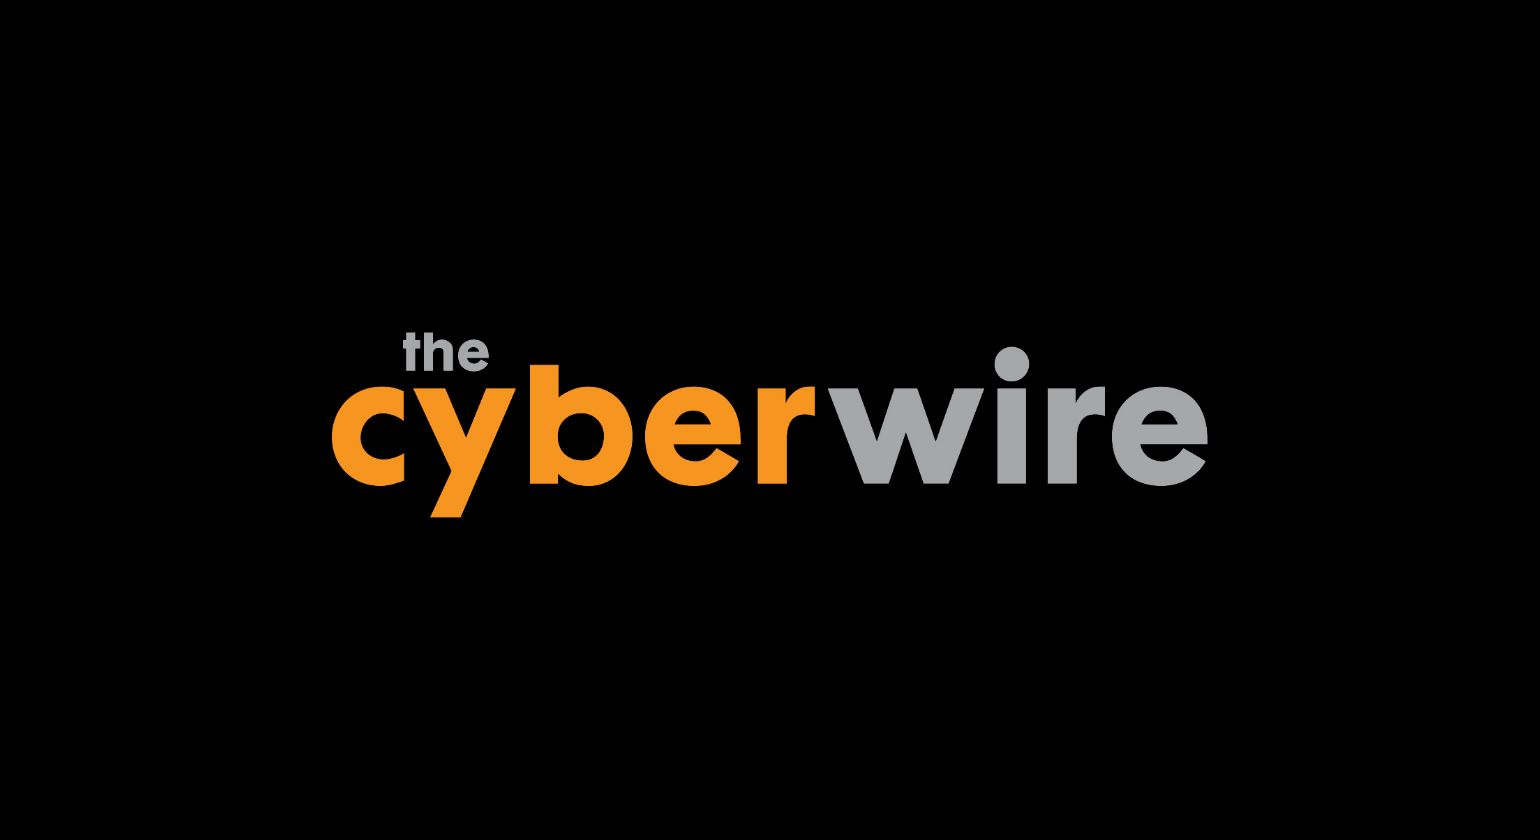 the cyberwire logo